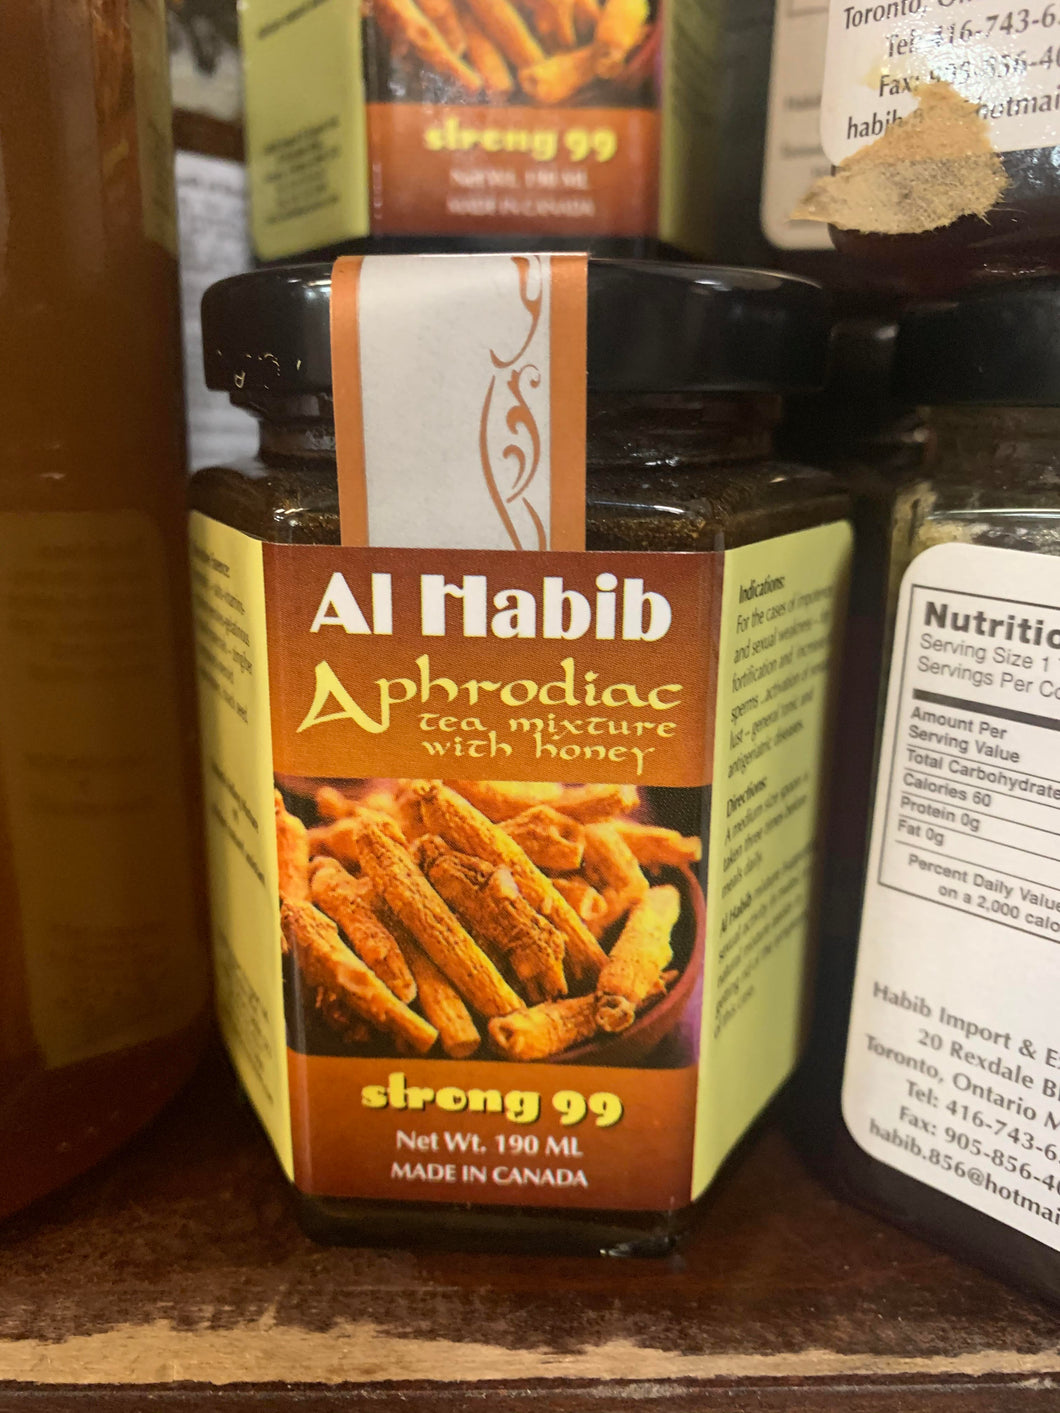 Aphrodiac (tea mixture with honey)